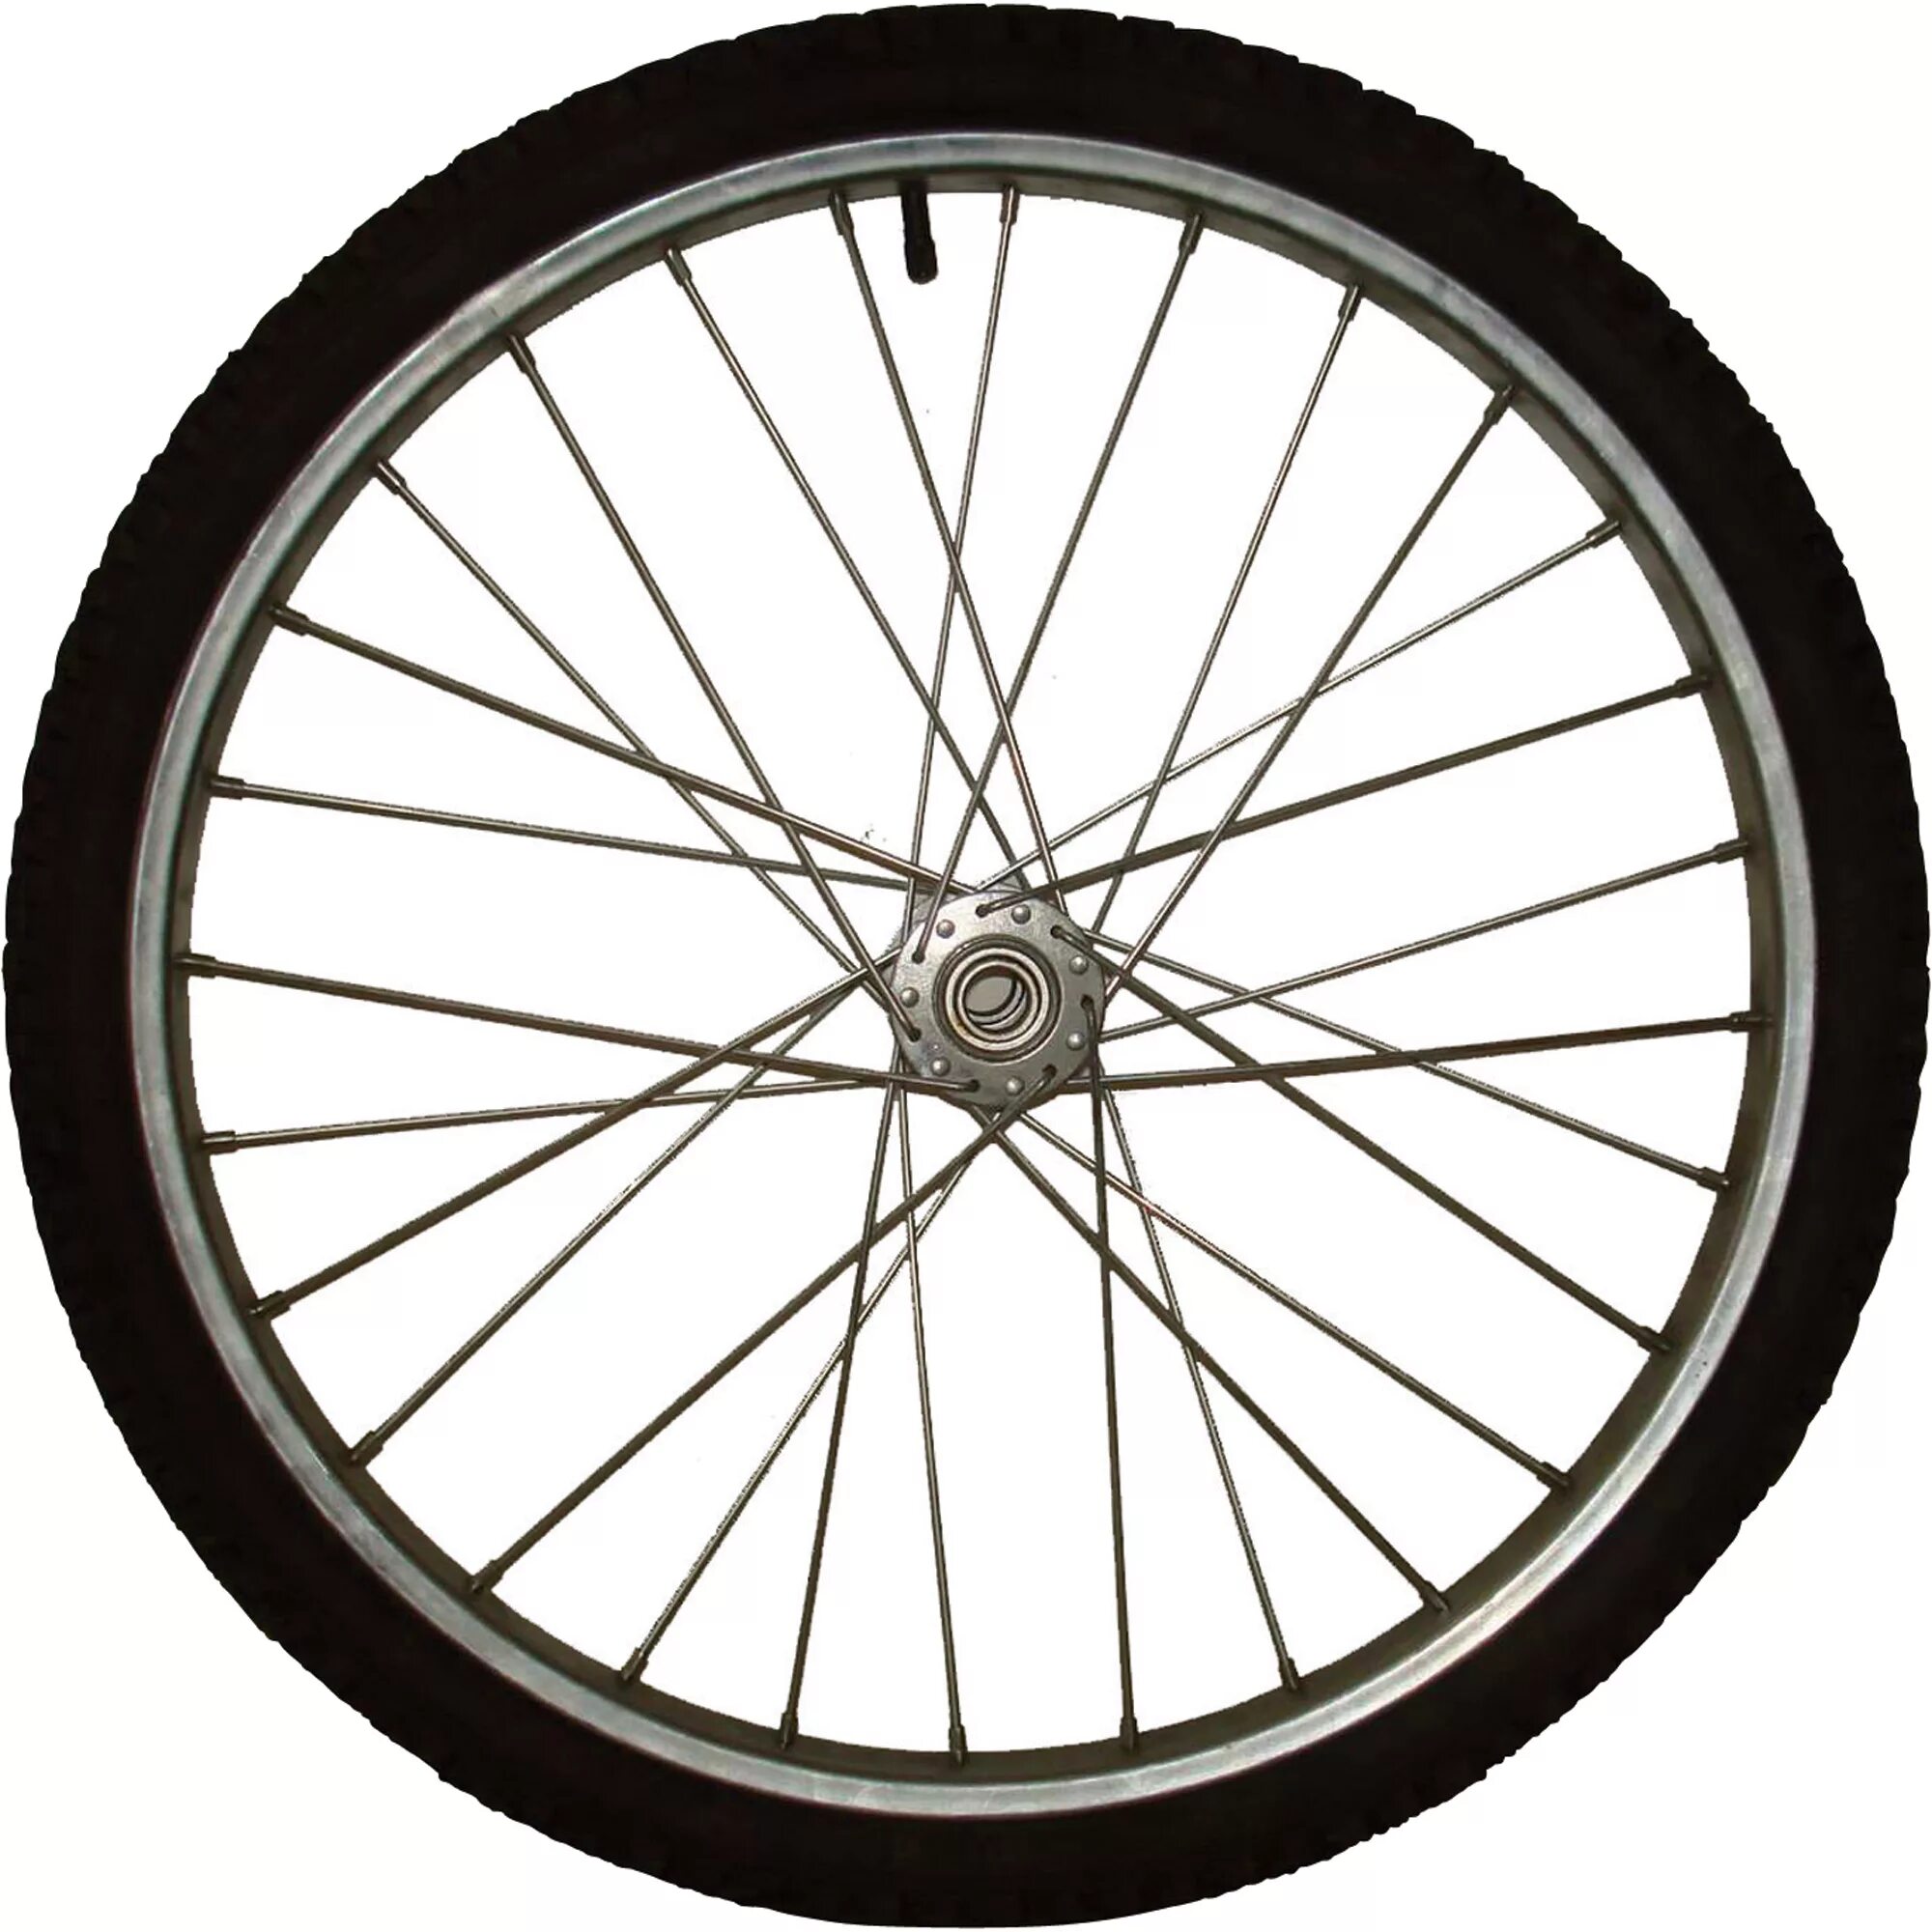 Колесо велосипед рисунок. Колесо велосипеда. Колесо от велосипеда. Велосипедное колесо на прозрачном фоне. Колесо от велика.